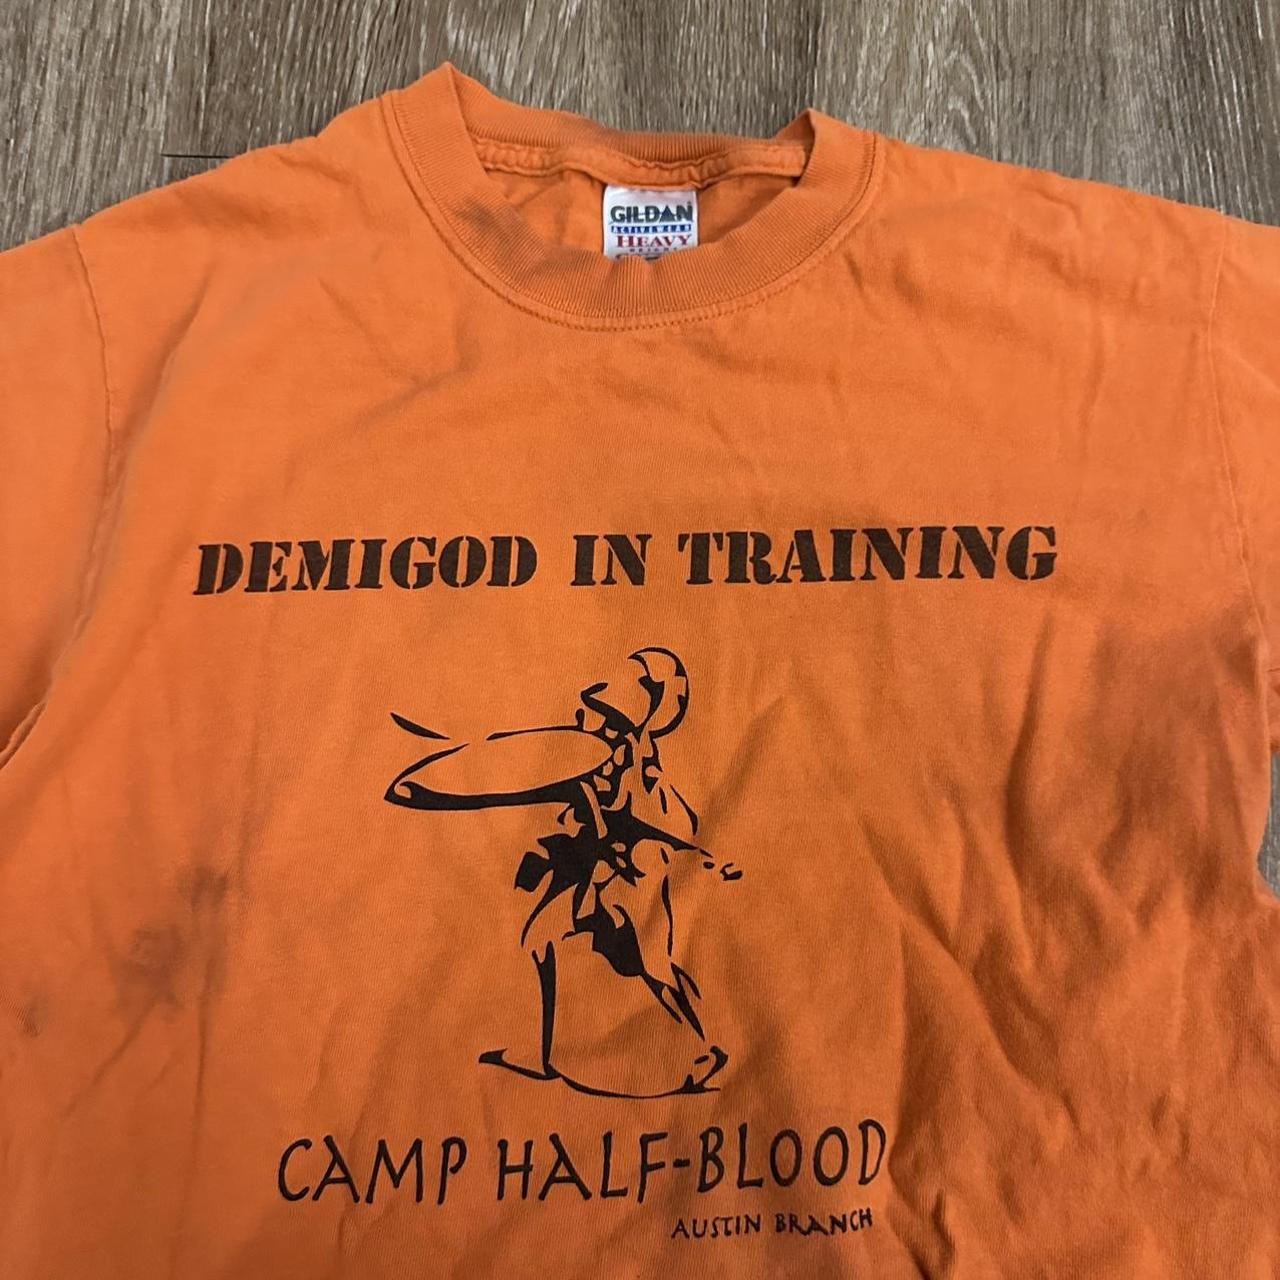 Womens Camp Half-Blood T-Shirt 